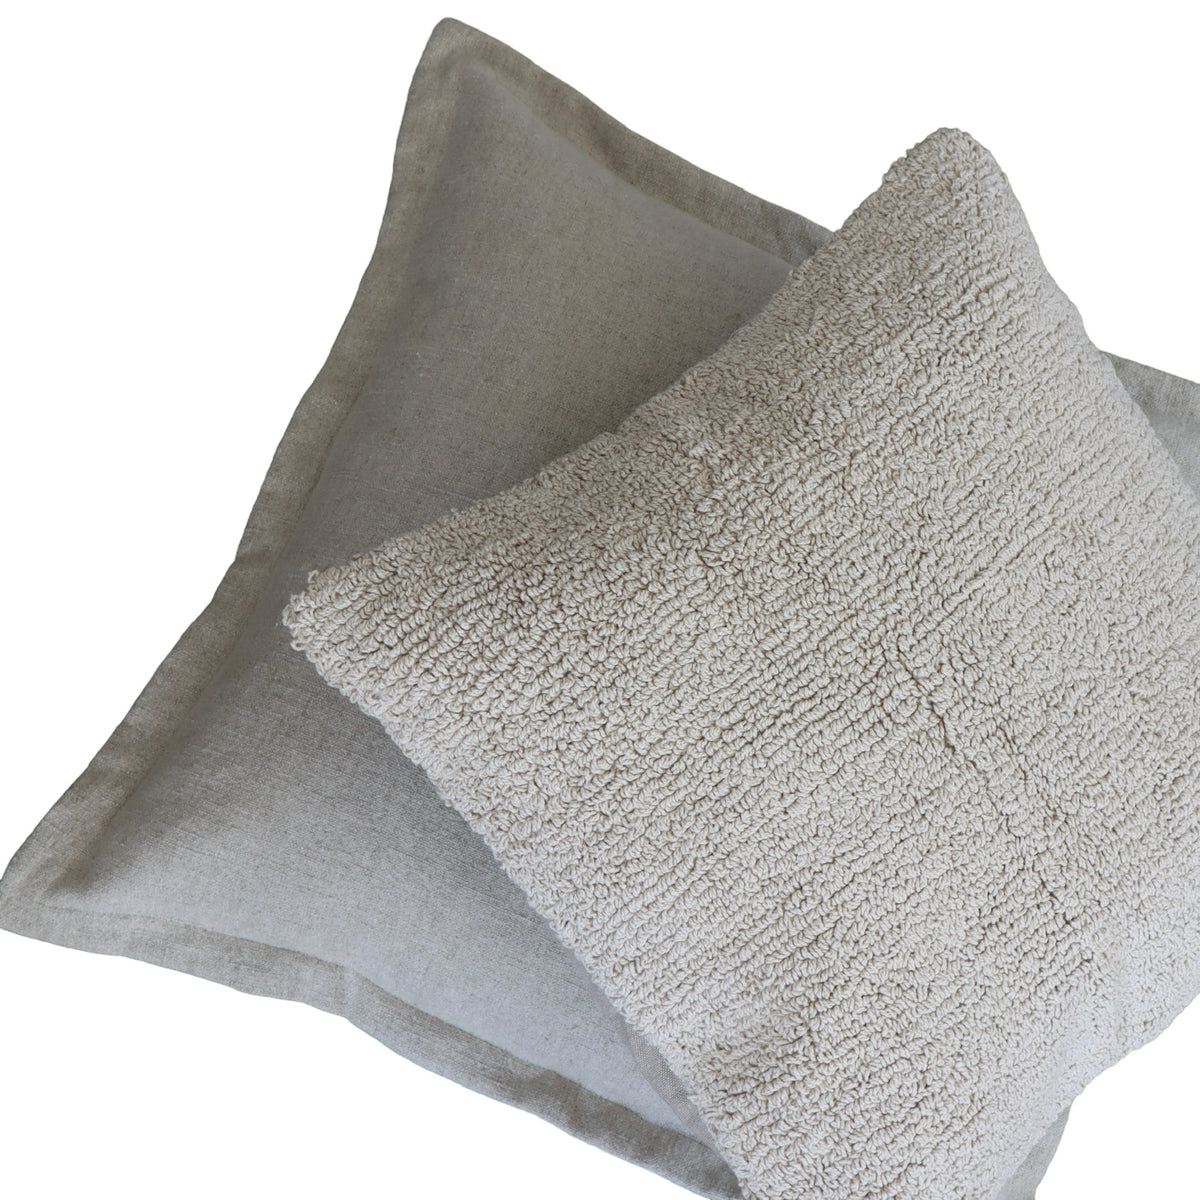 Almond Woven Linen and Cotton Pillow - Holistic Habitat 